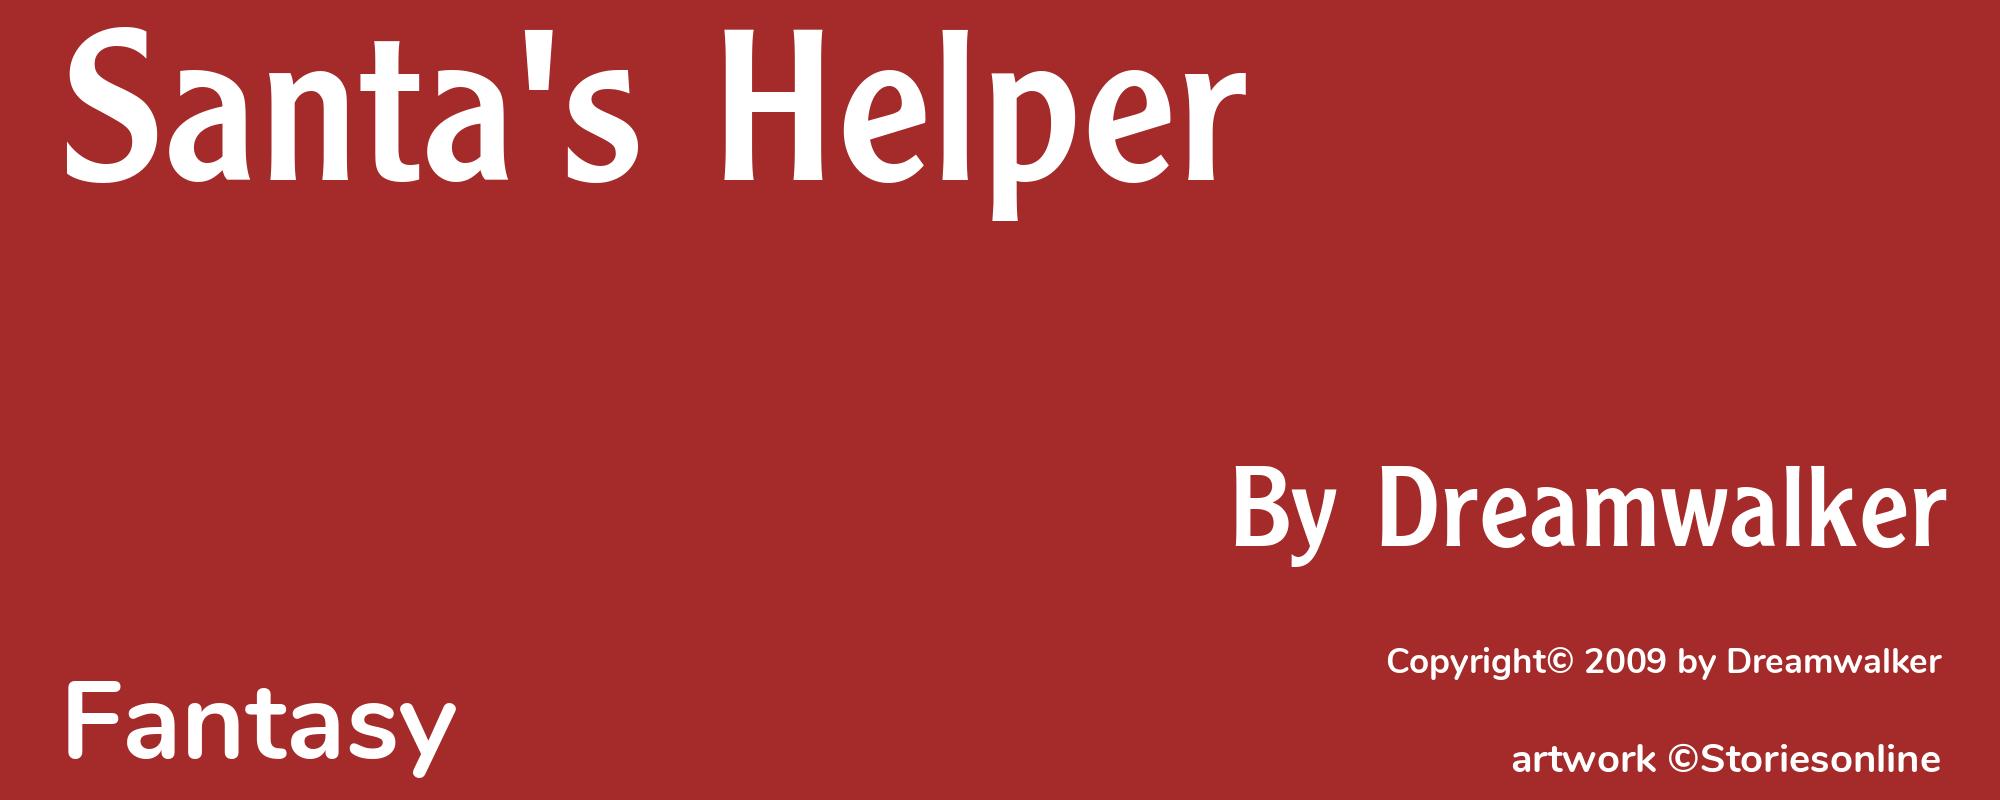 Santa's Helper - Cover